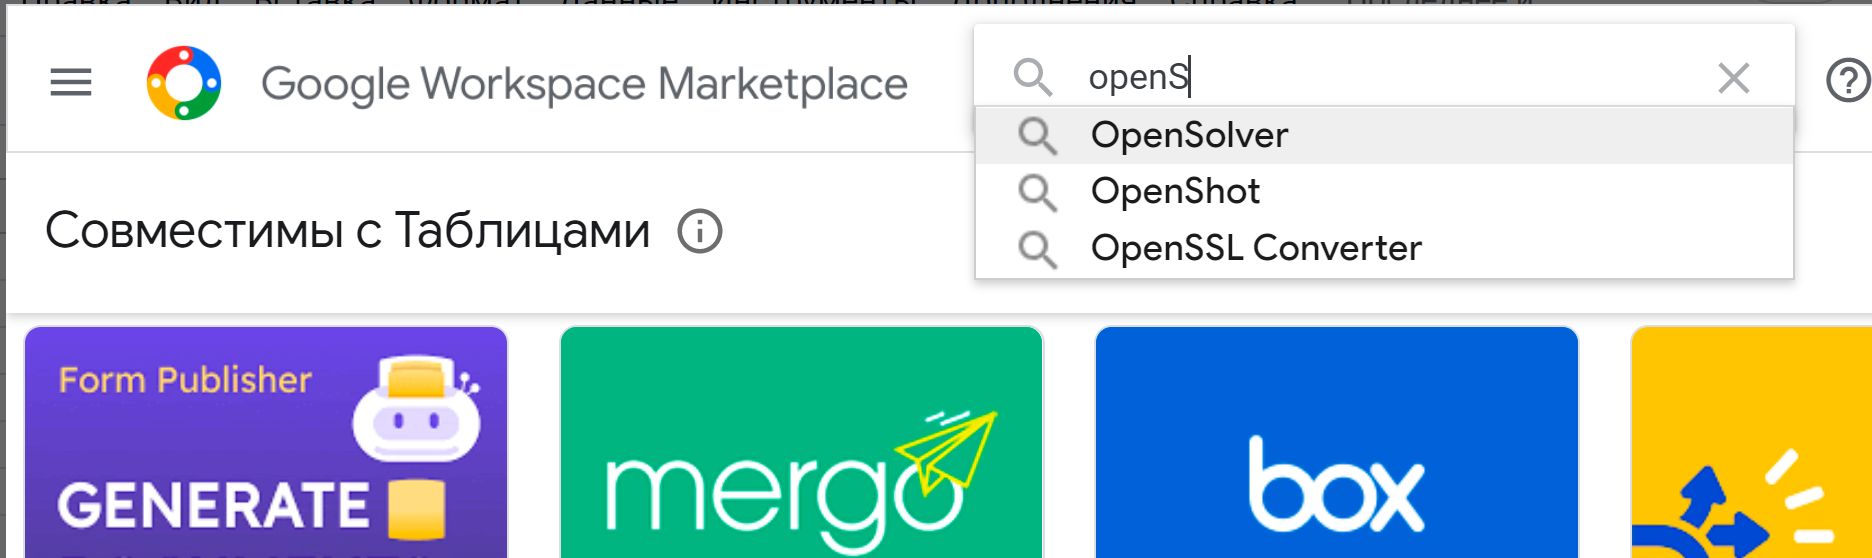  Как найти OpenSolver в Google Workspace Marketplace